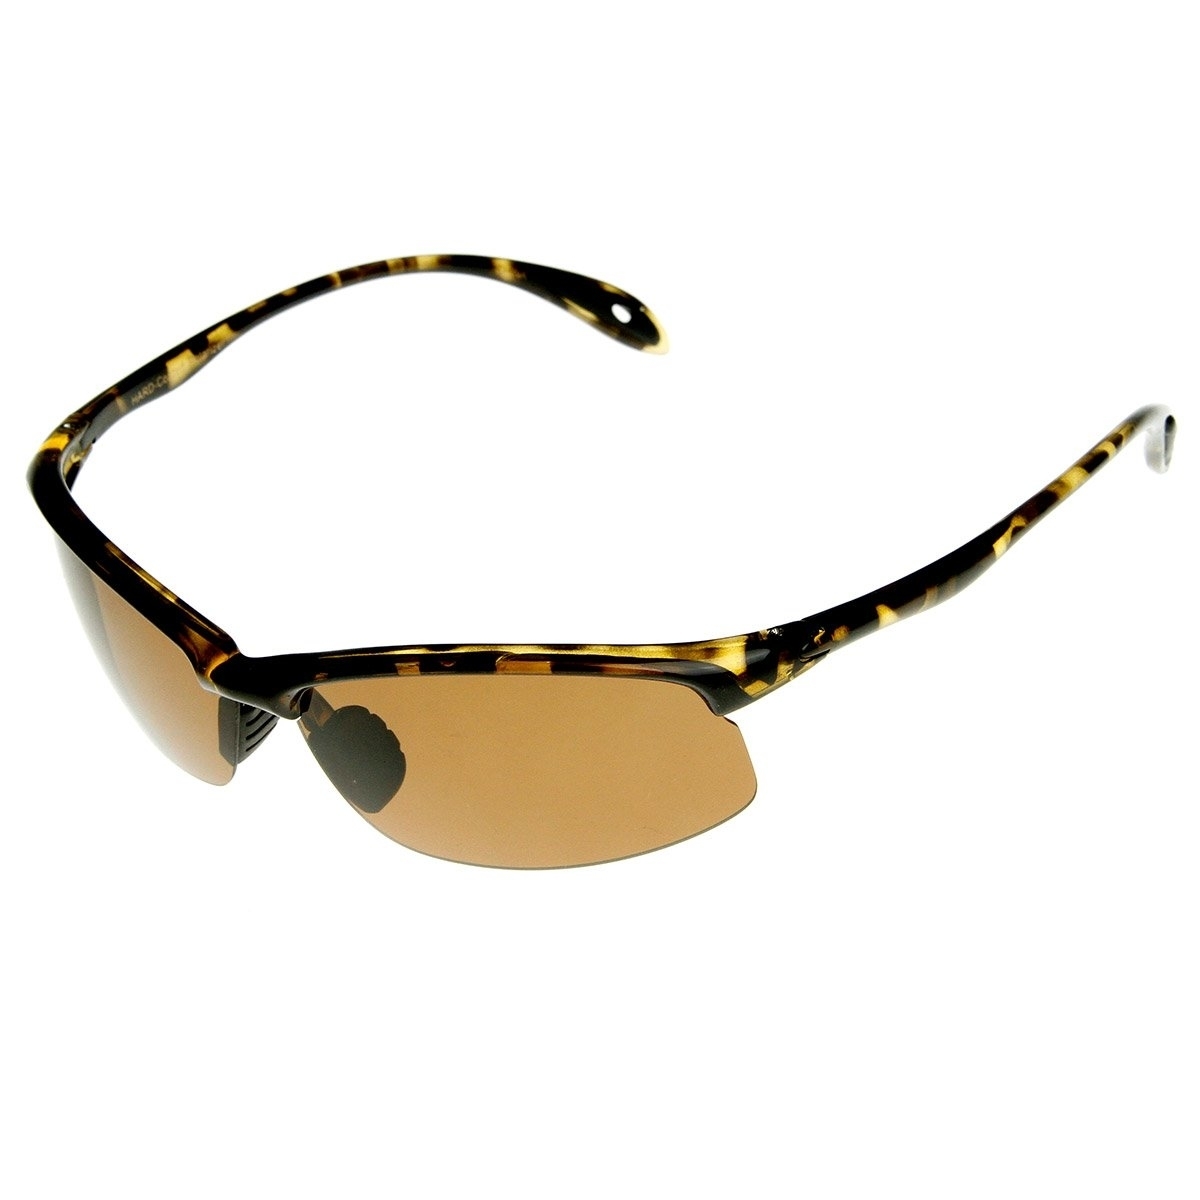 Polarized Half Frame Lightweight Action Sports Sunglasses - Black Green